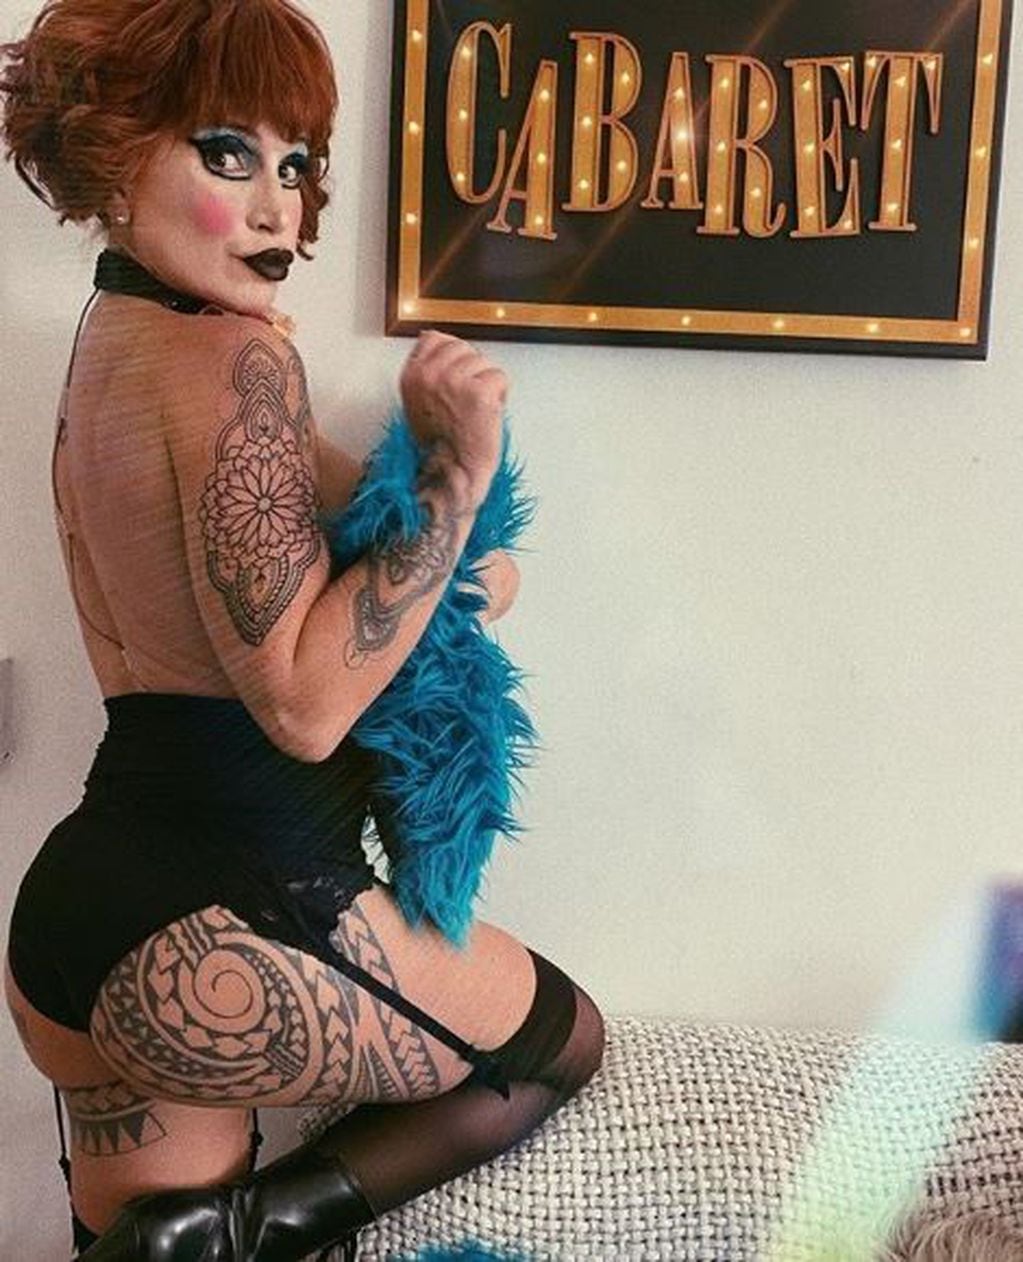 Flor Peña, protagonista de Cabaret. Instagram/flor_de_p